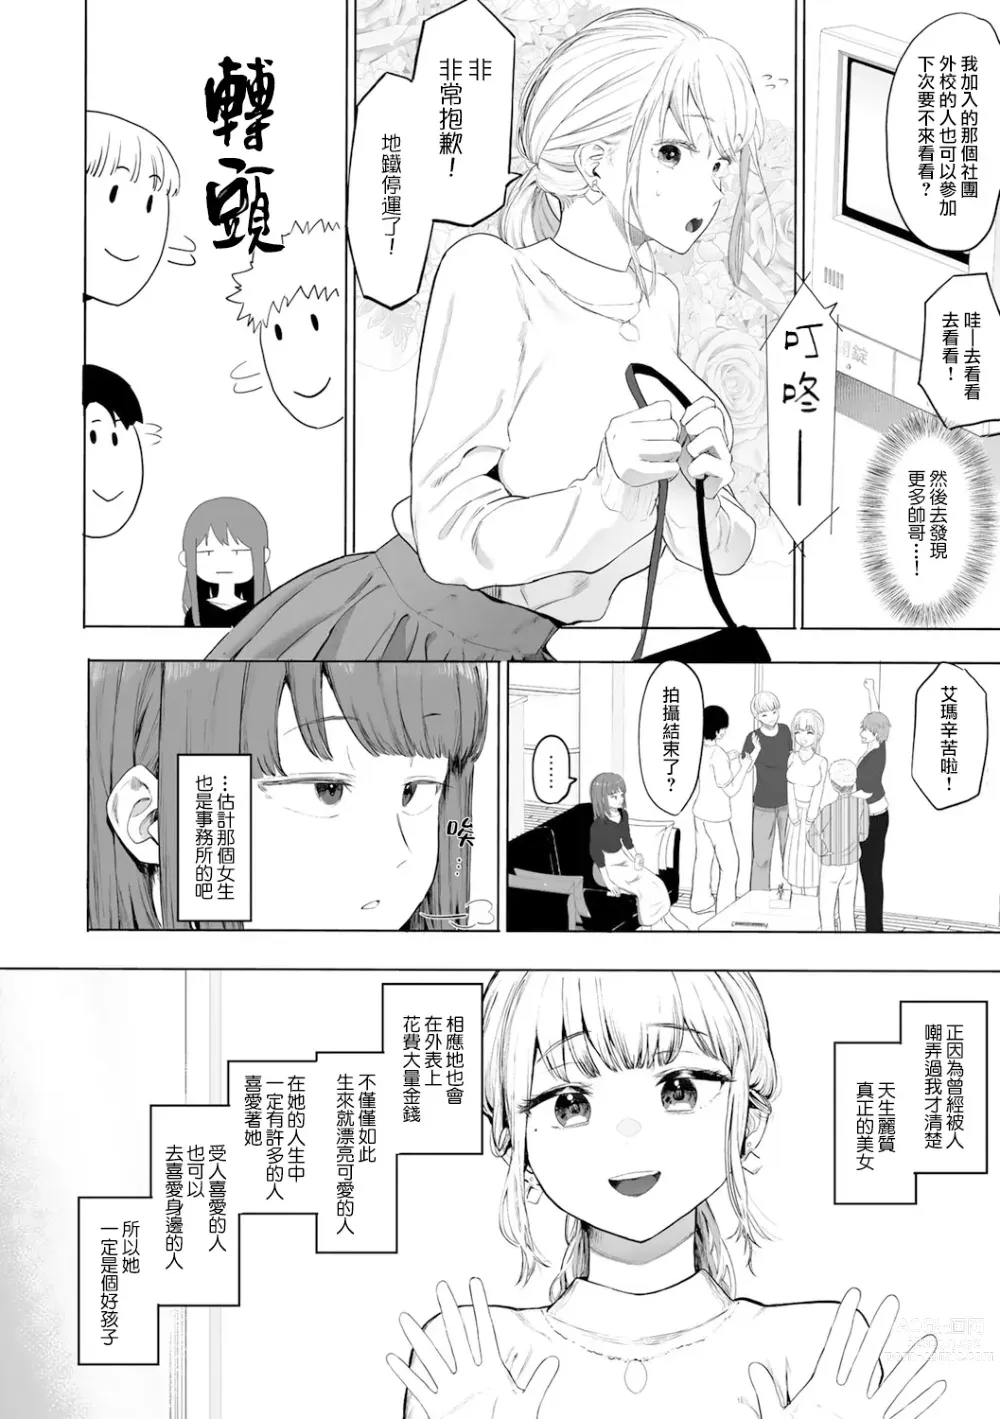 Page 5 of manga 都内/JD/优质110